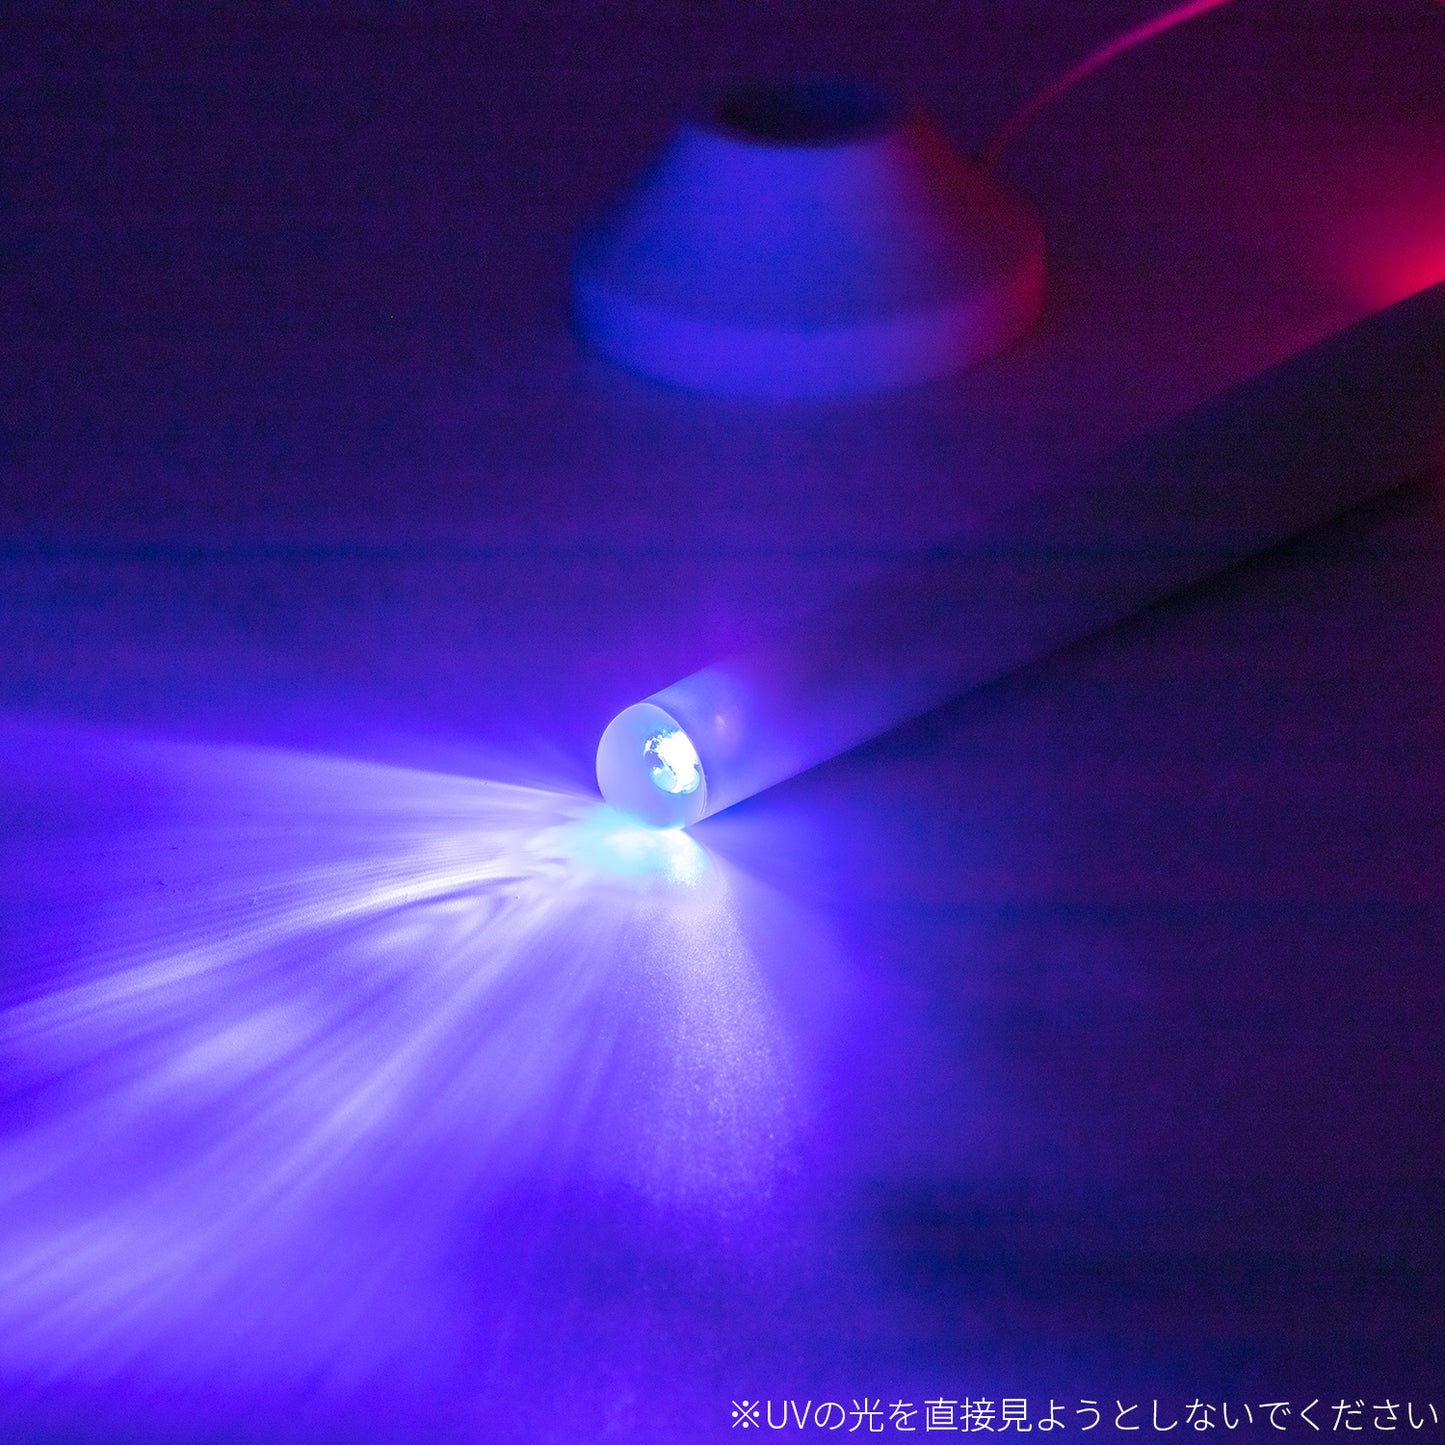 SSI JAPAN UV-C 紫外線飛機杯消毒加溫棒